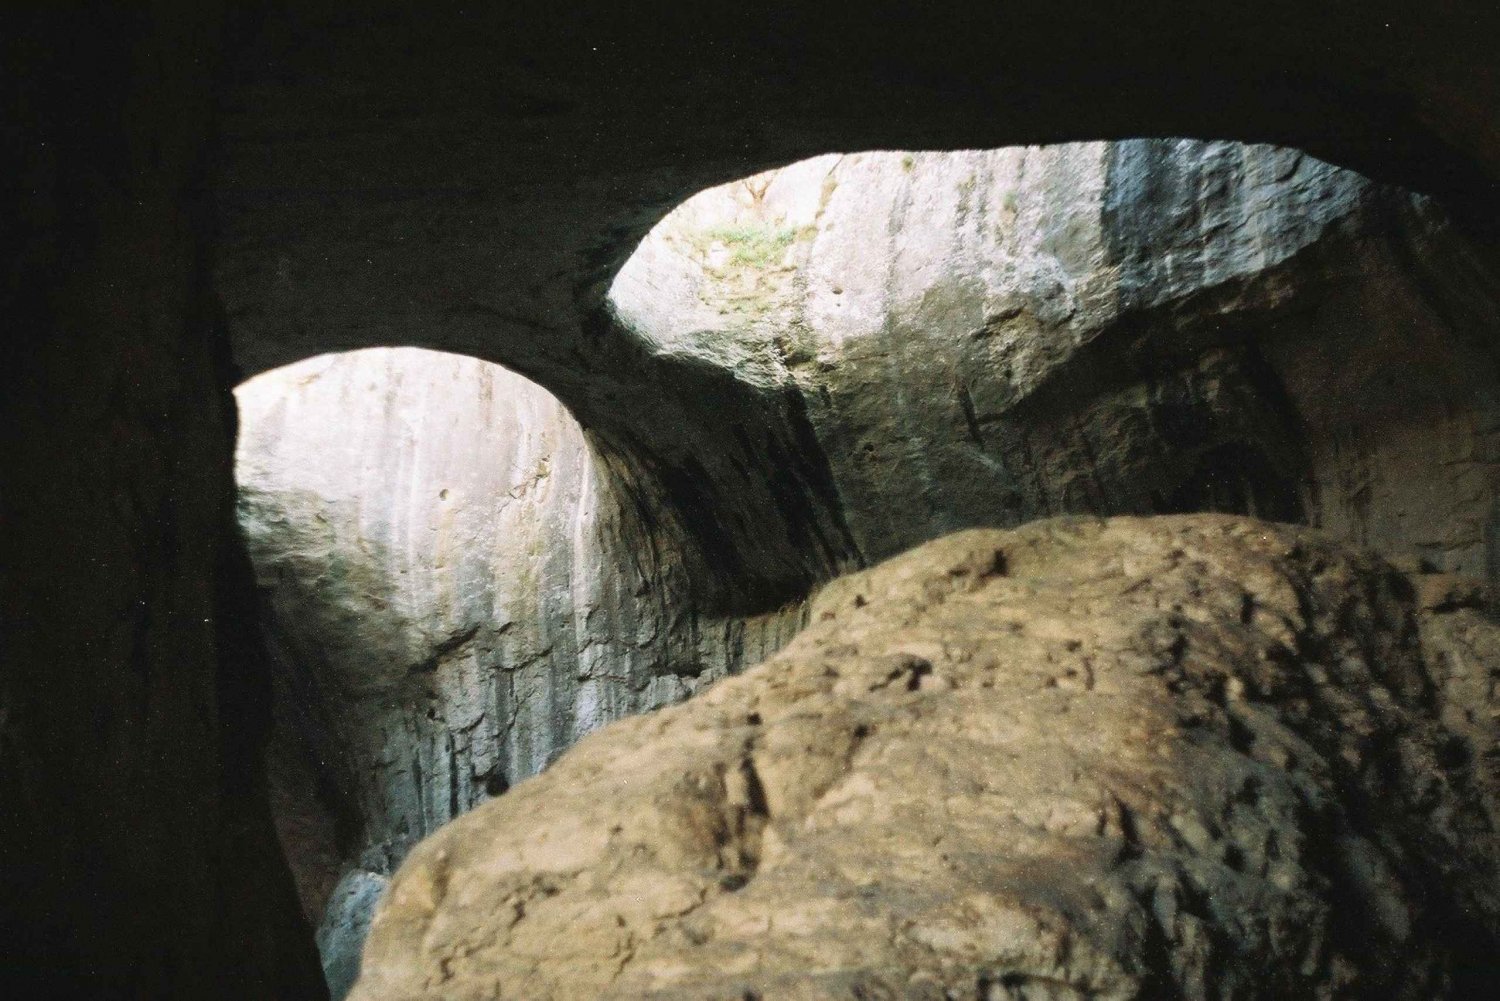 Excursão Prohodna, Caverna Saeva Dupka e Glozhene saindo de Sofia